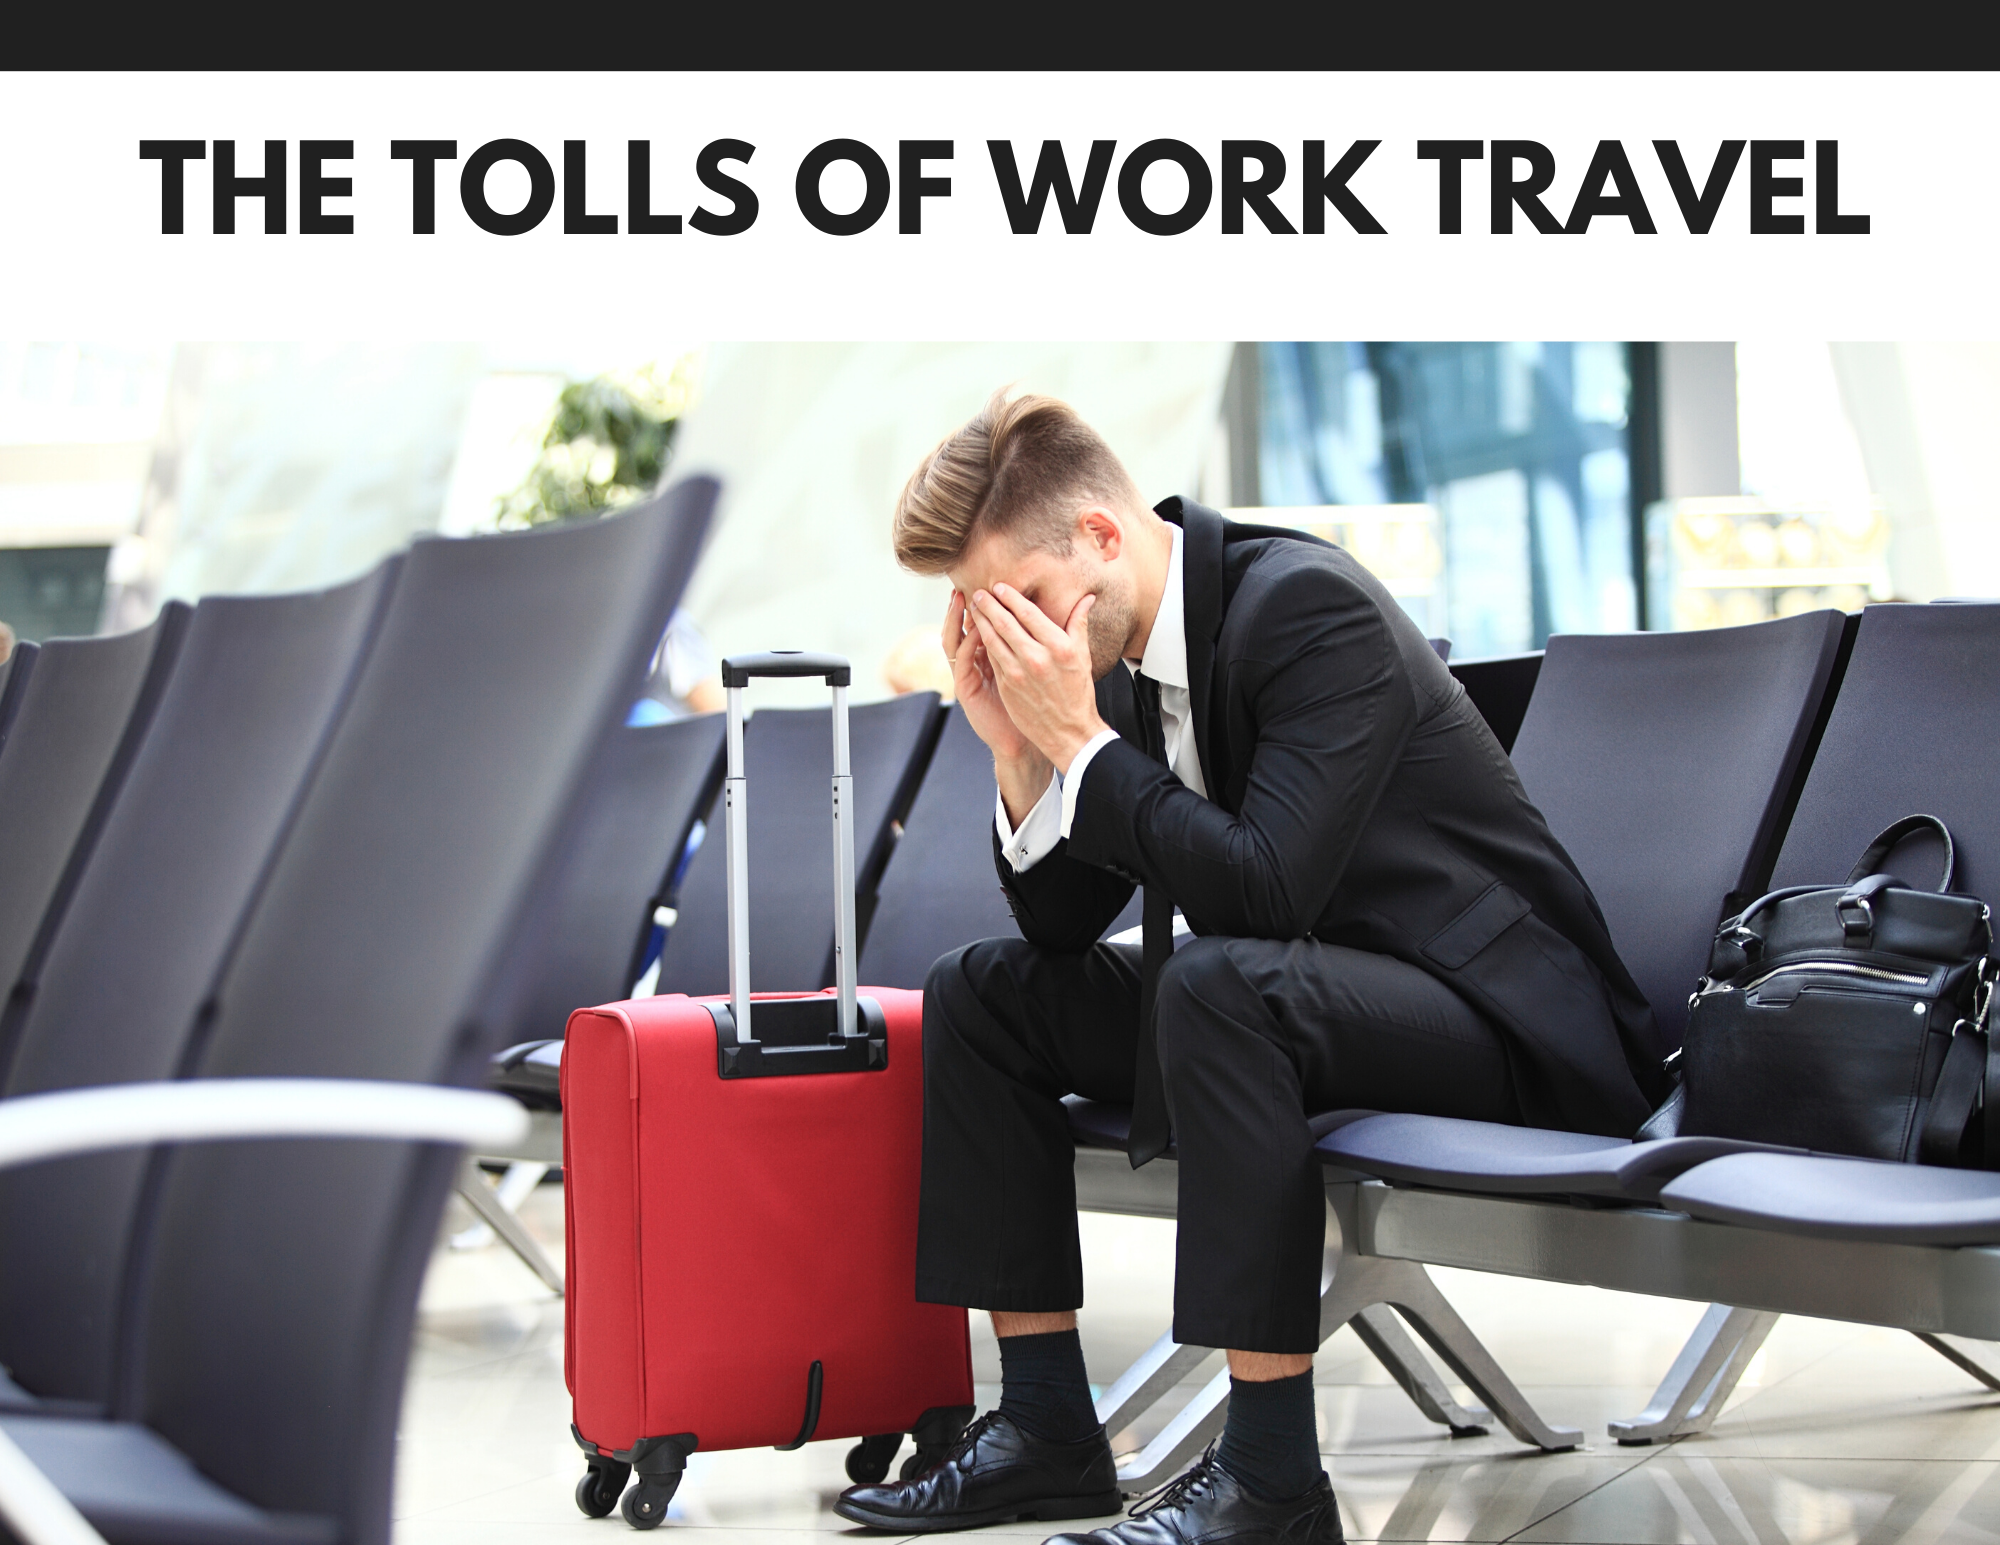 work travel or travel work